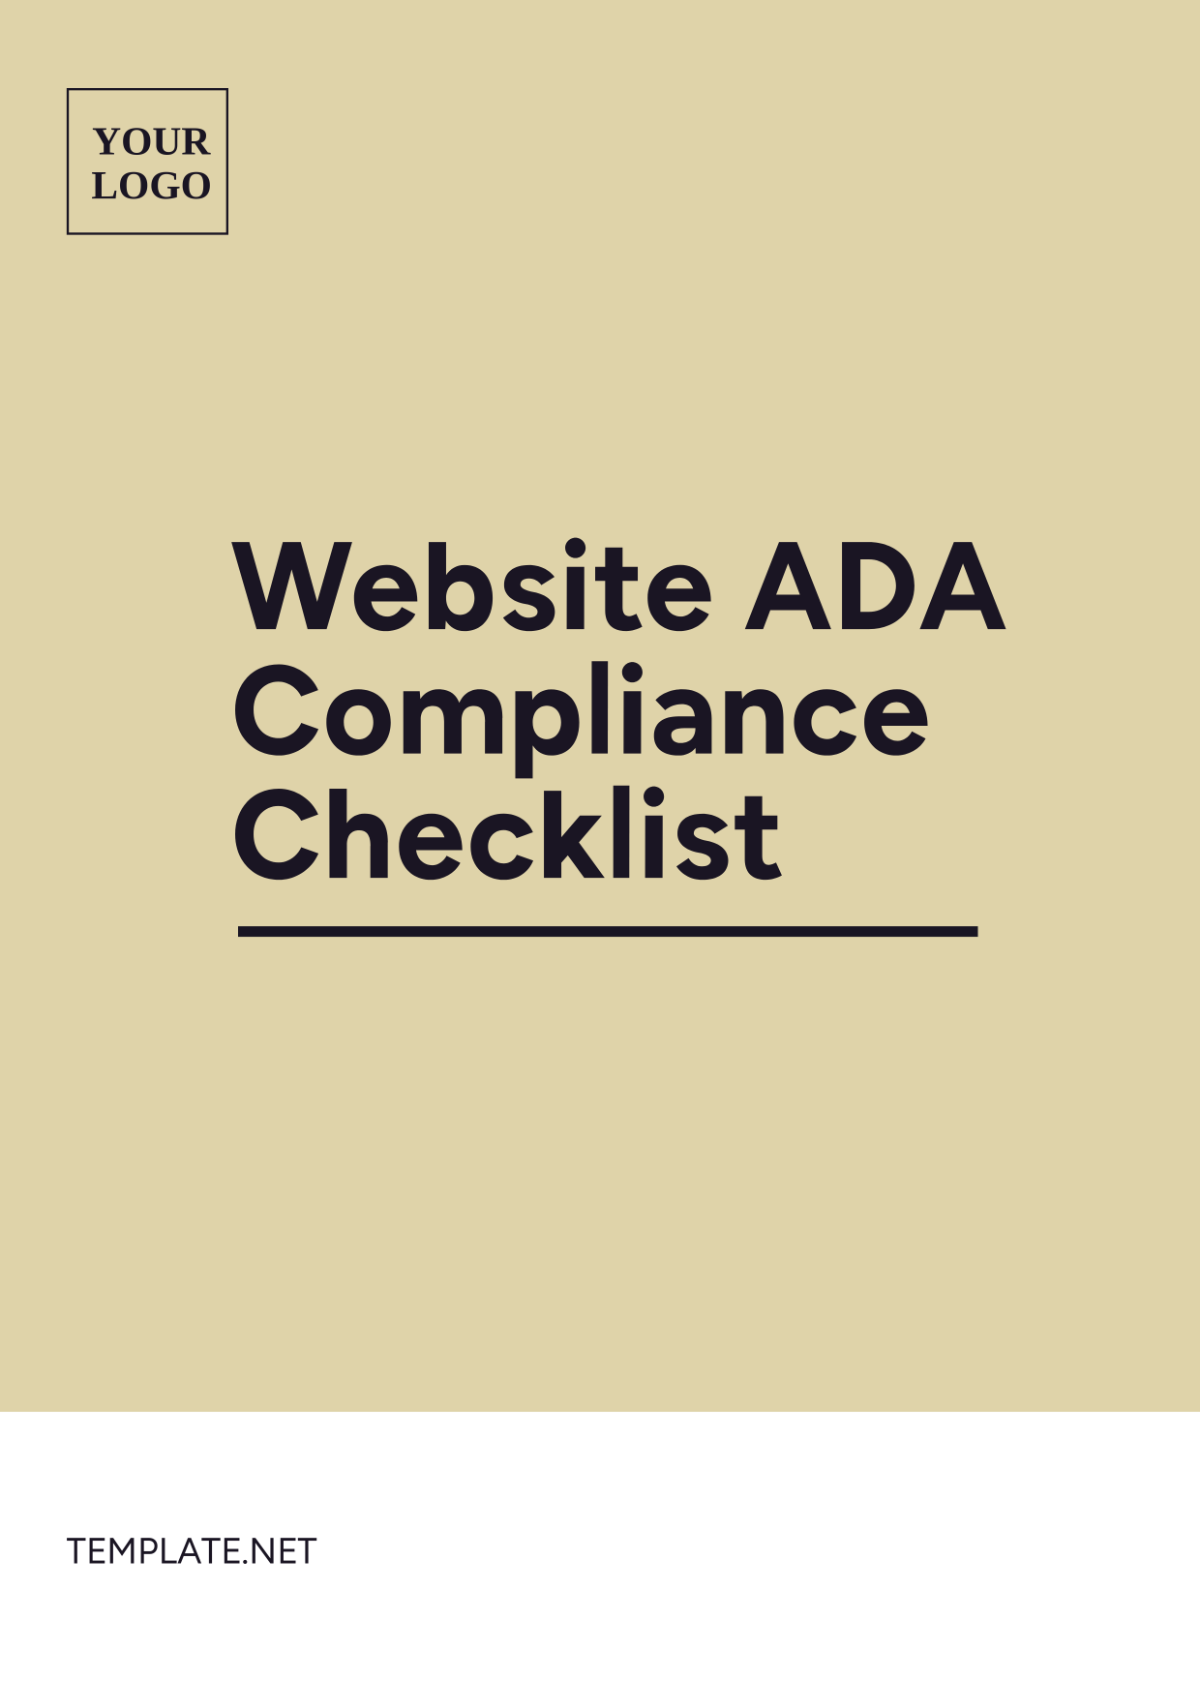 Website ADA Compliance Checklist Template